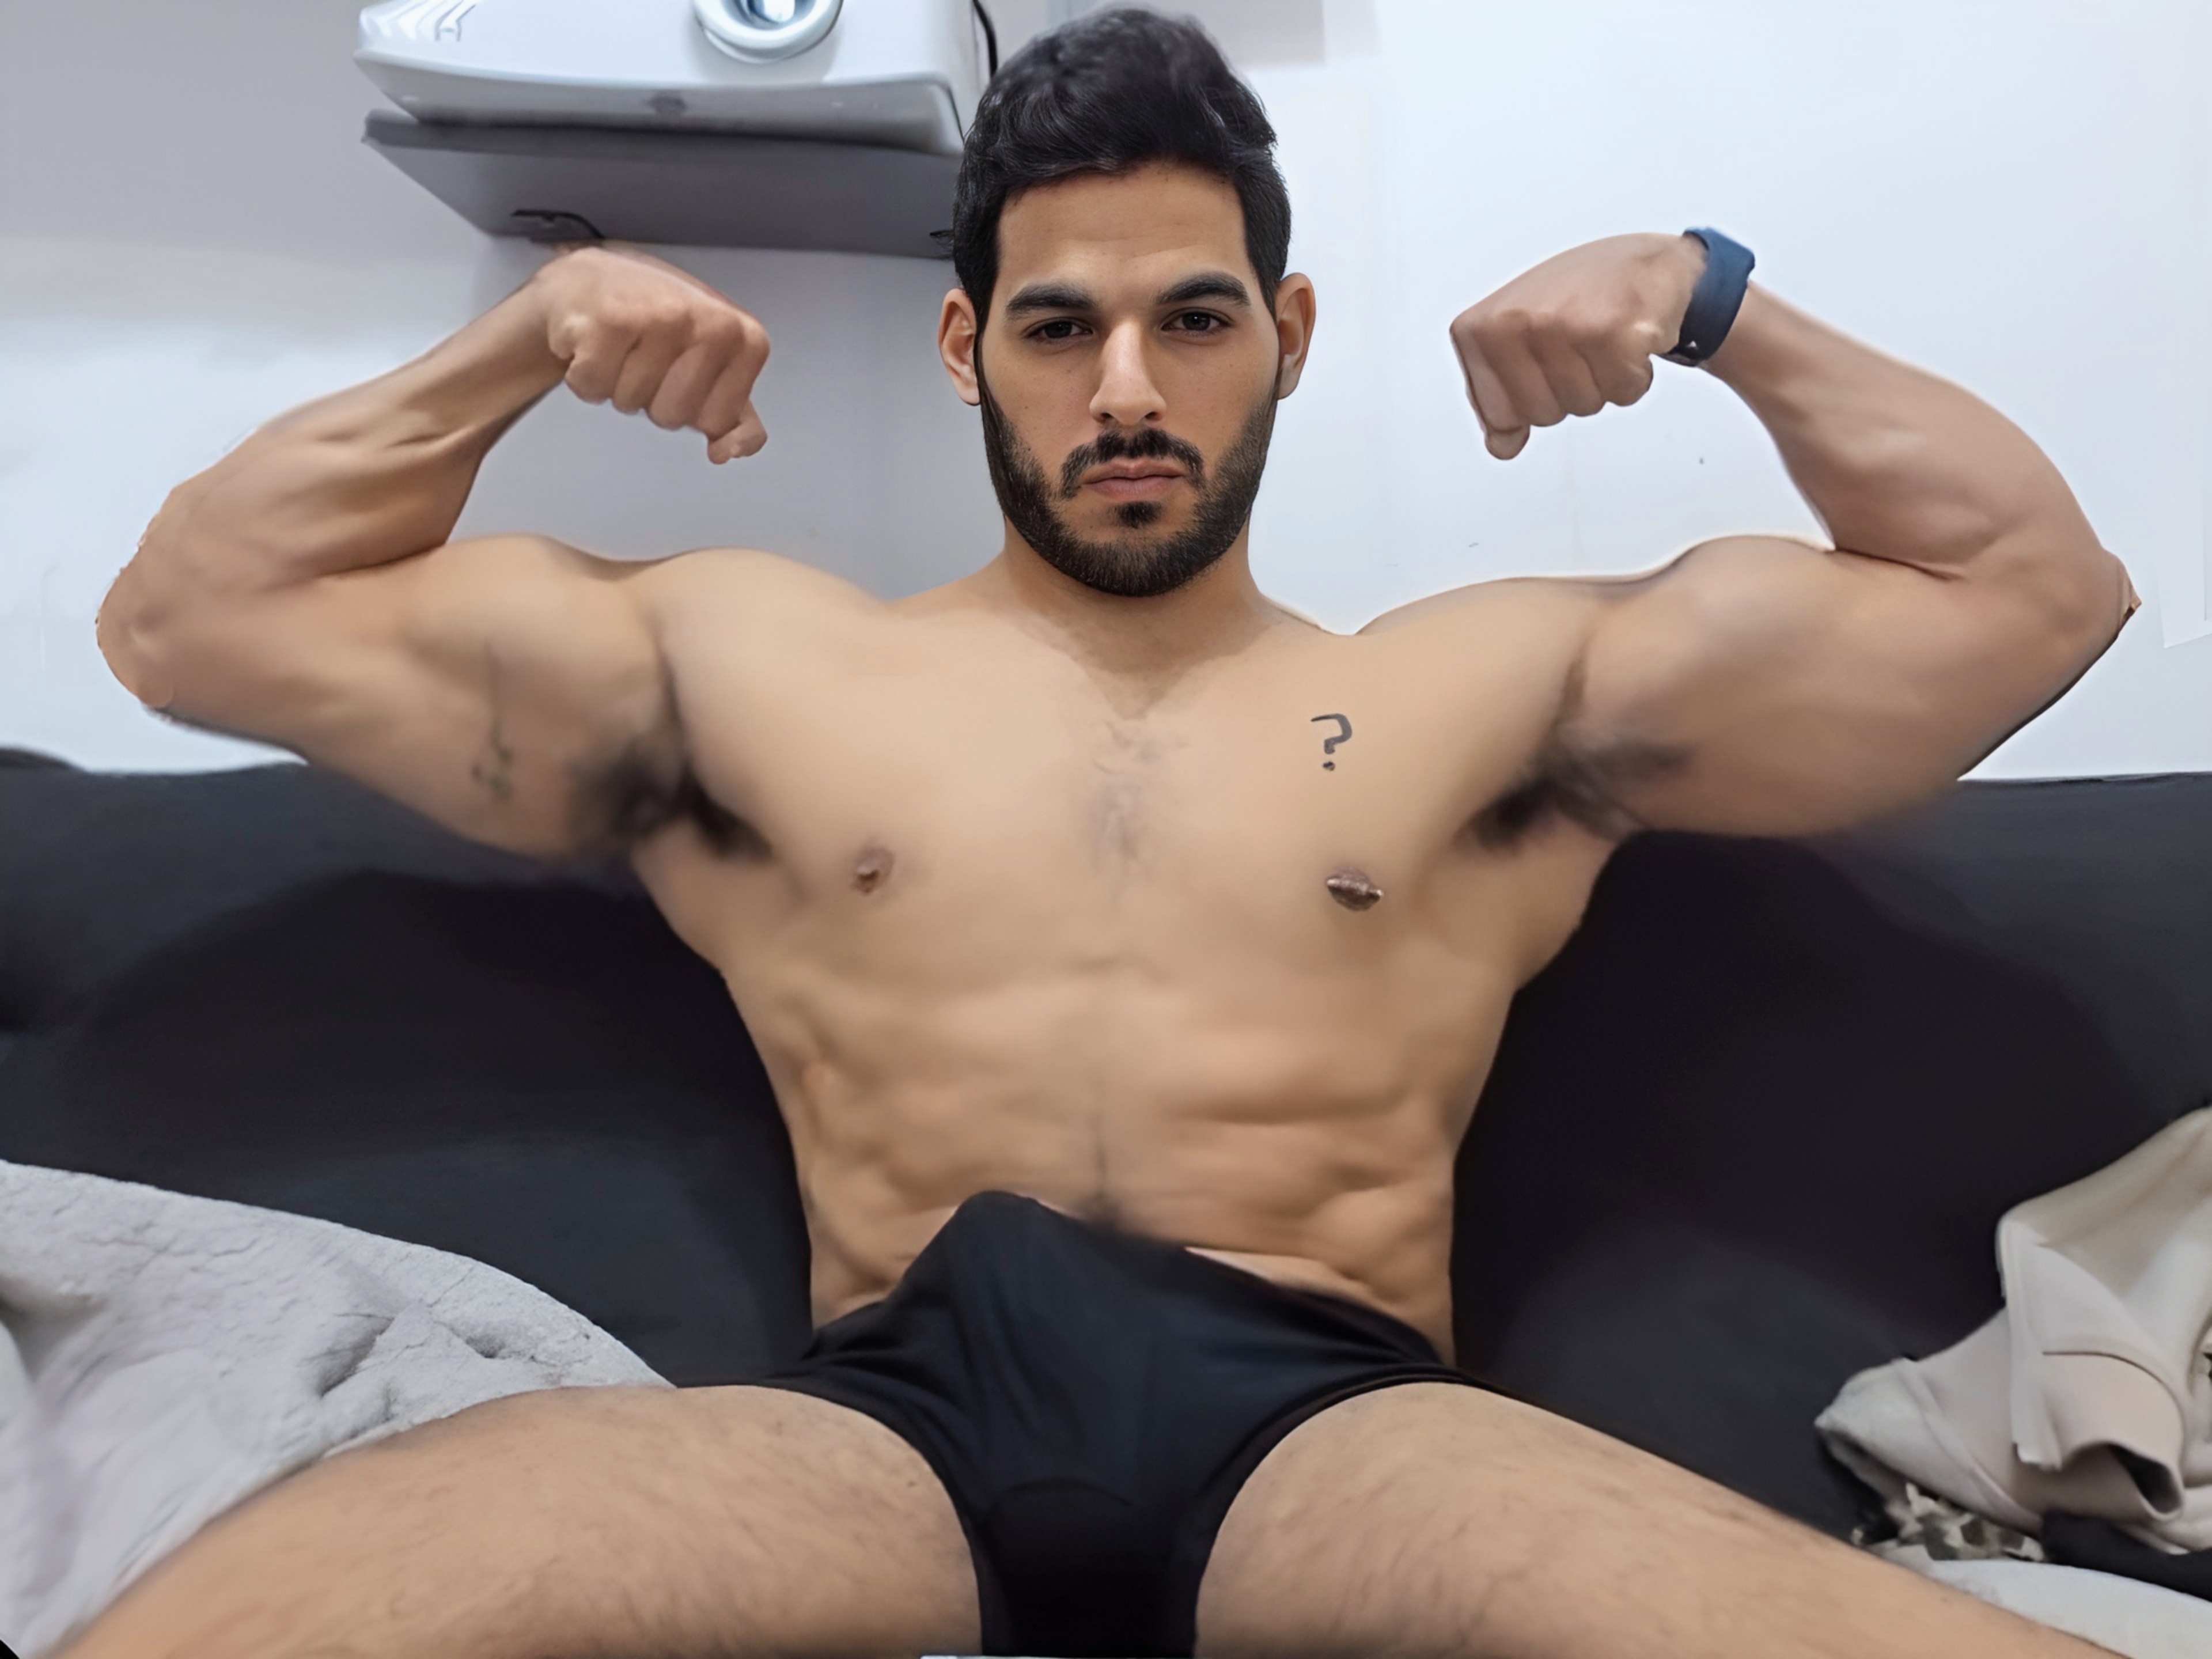 Hot Israeli Guy Cumming in His Underwear pic photo pic